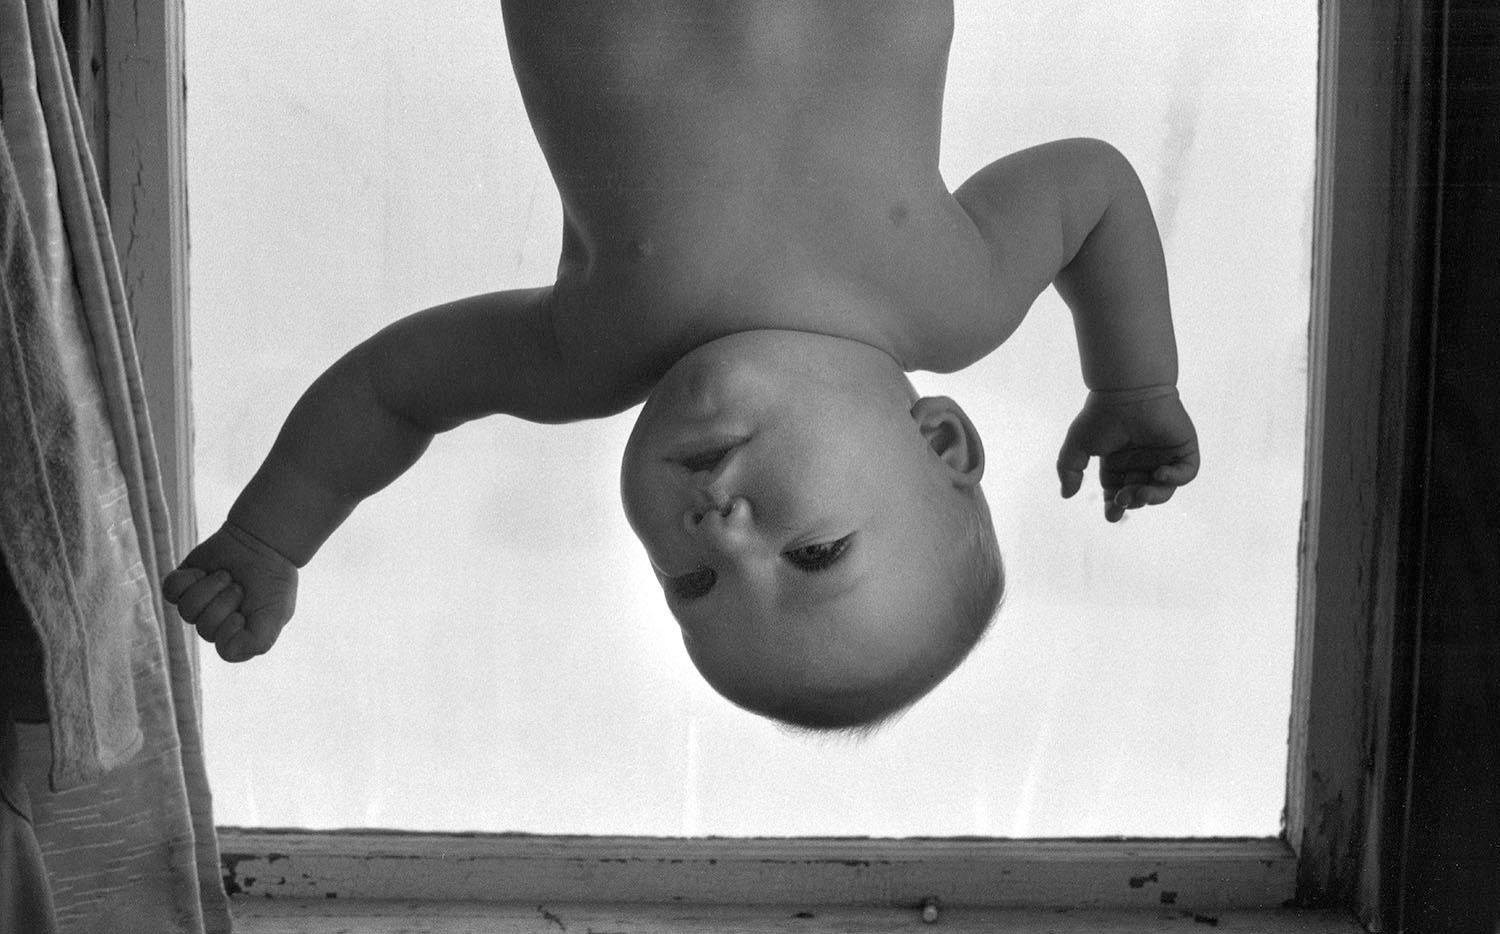 Upside Down Baby